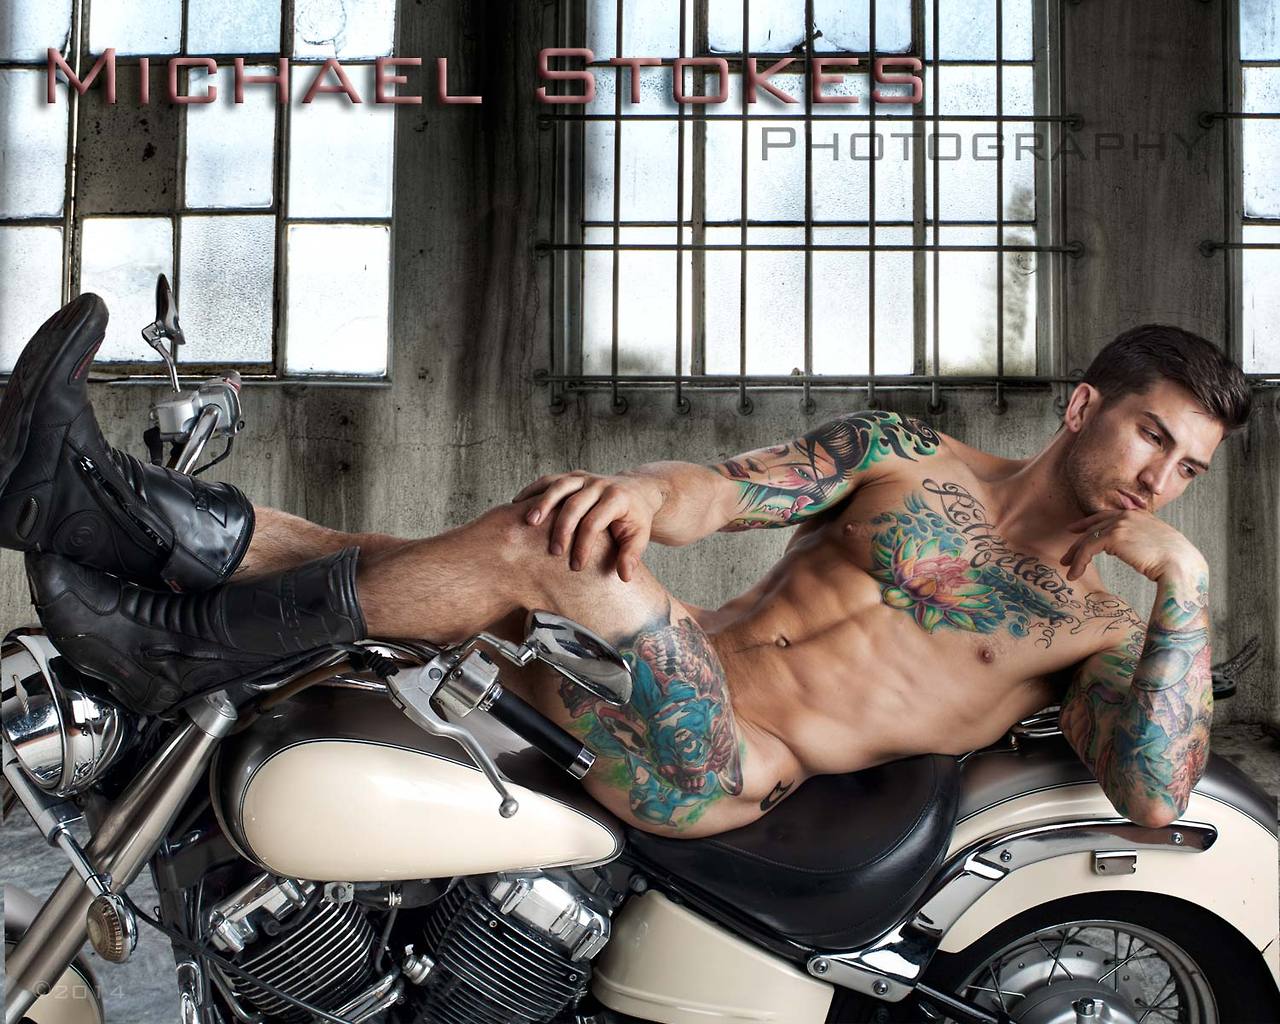 tatloveboys: michaelstokes: Adam resting on his bike More sexiness 